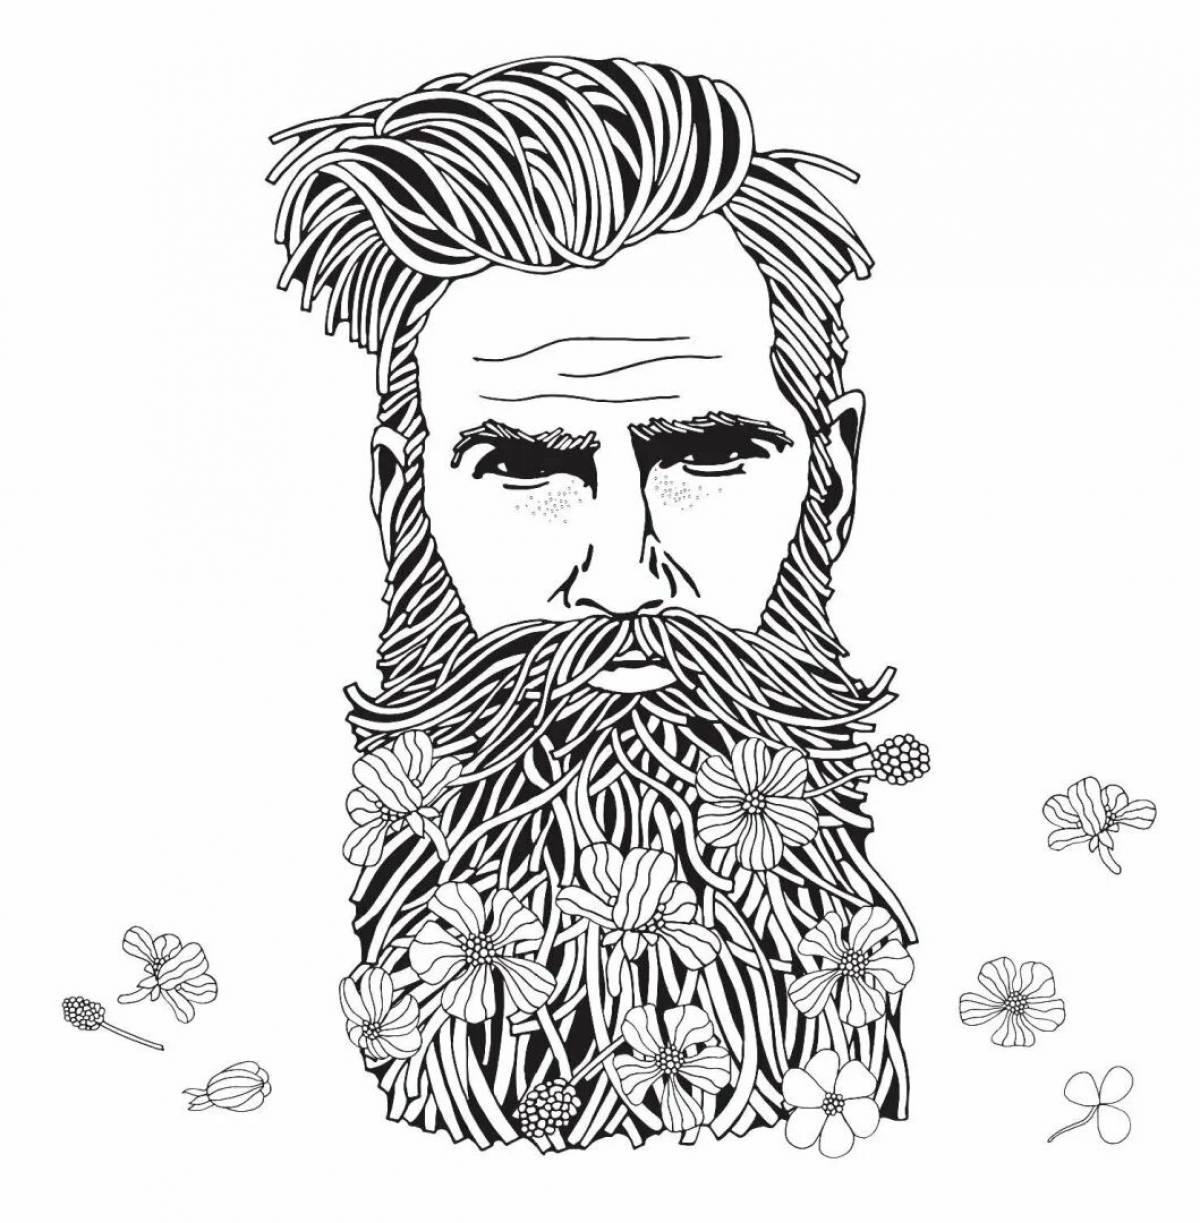 Beard #3